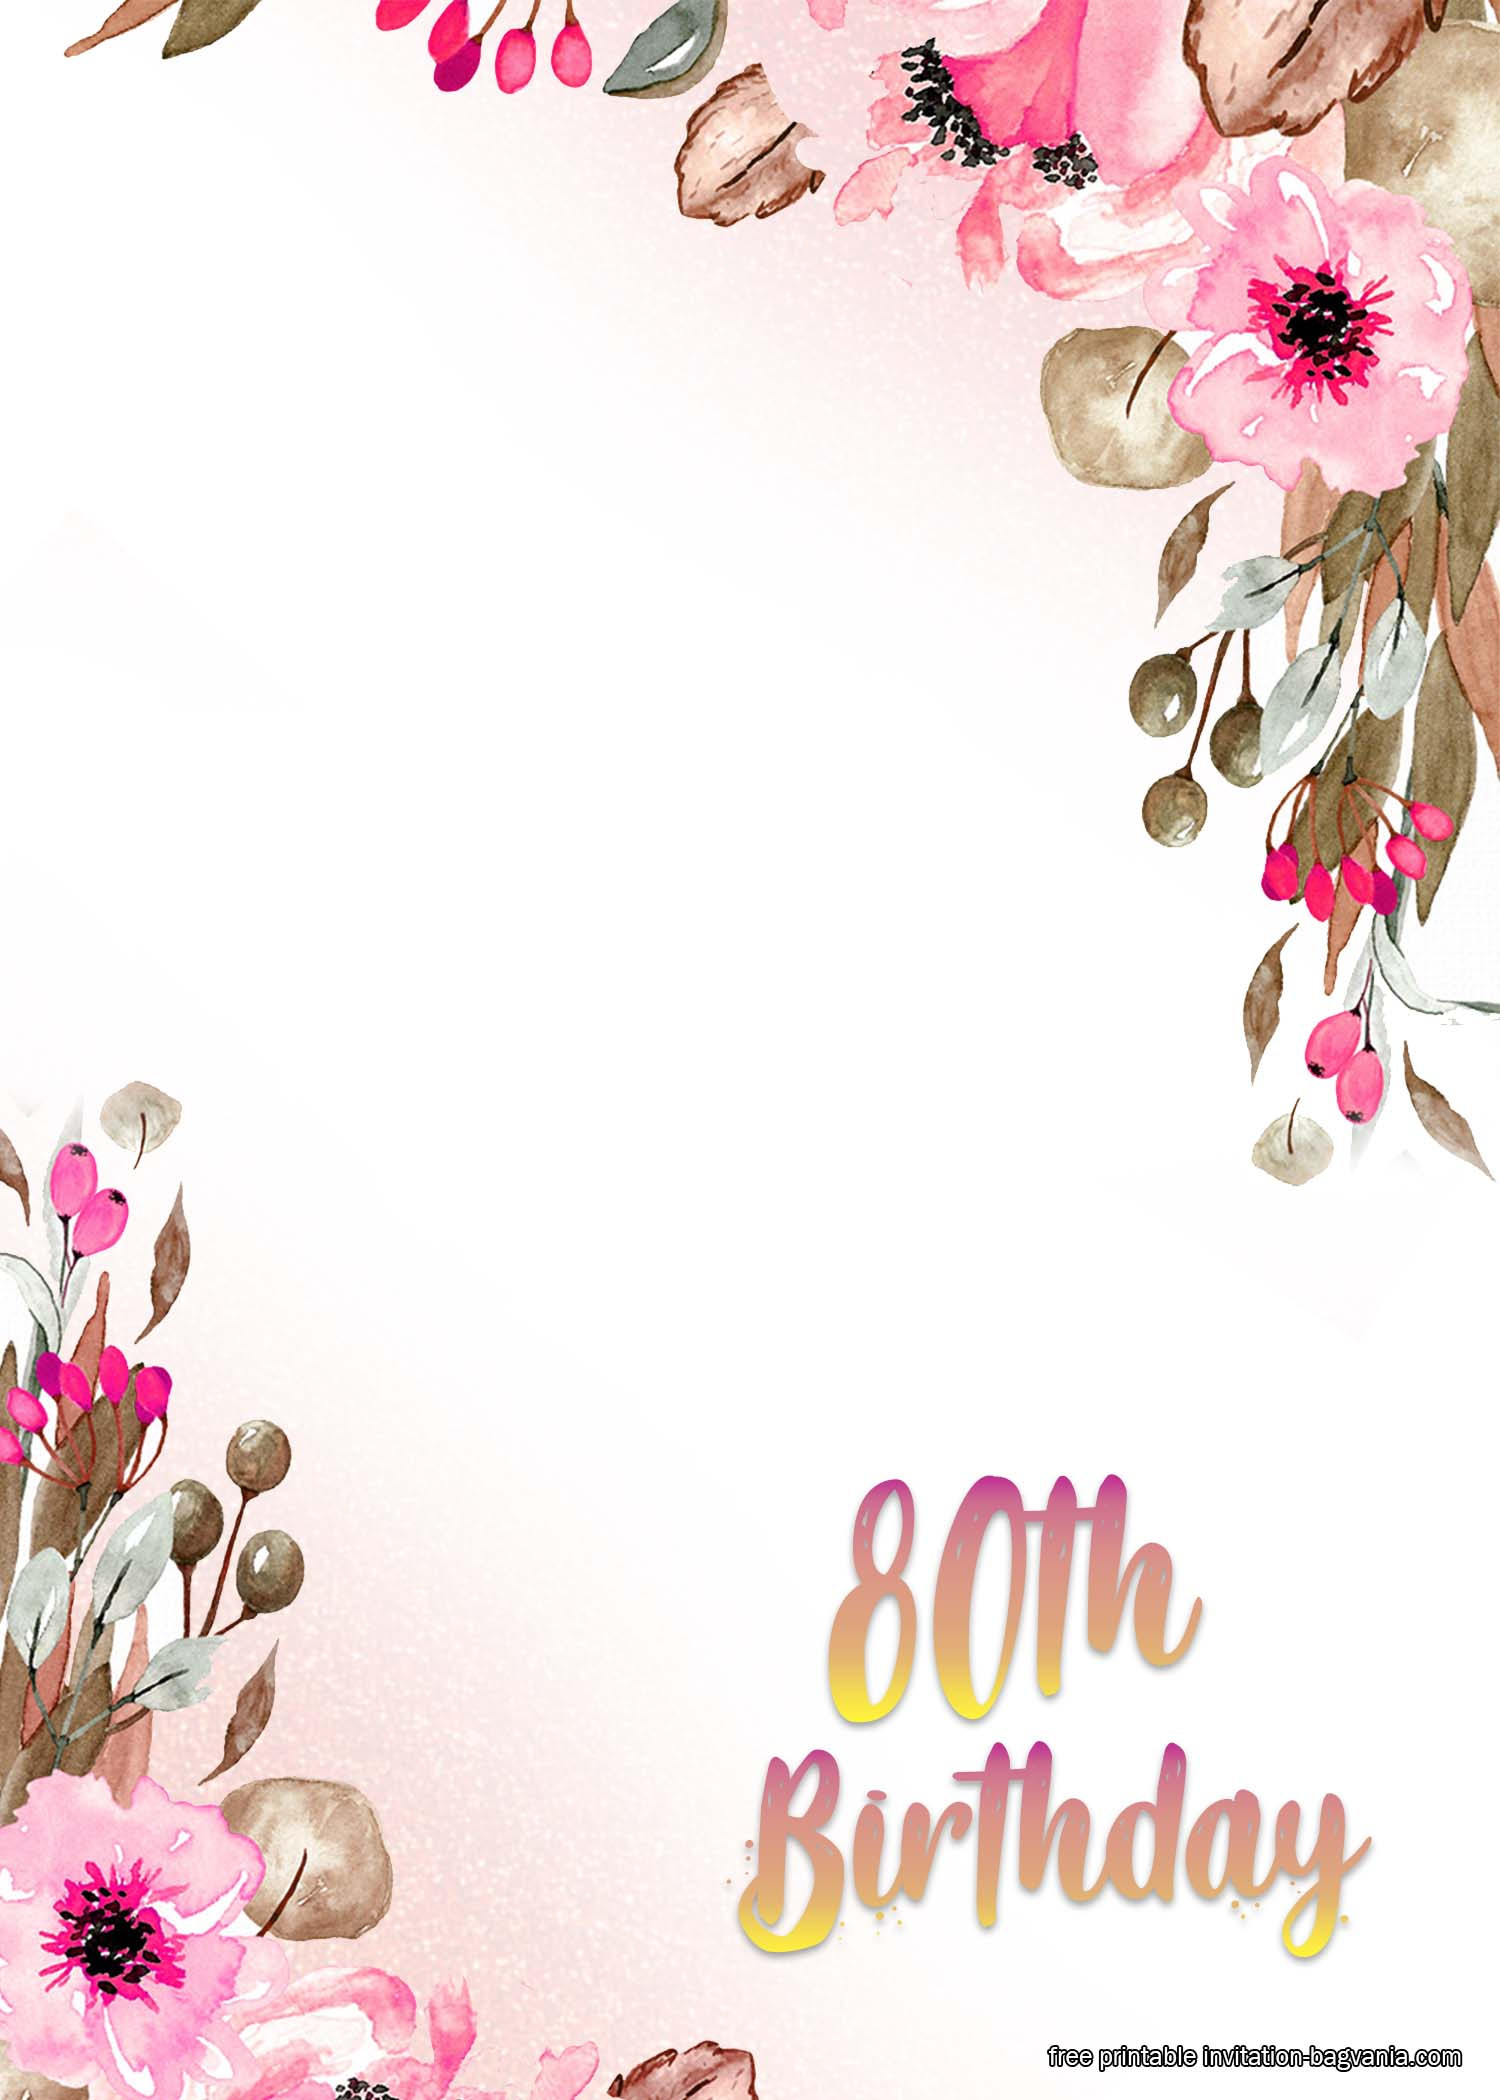 80th Birthday Invitations Templates
 FREE Printable 80th Birthday Invitation Templates – FREE